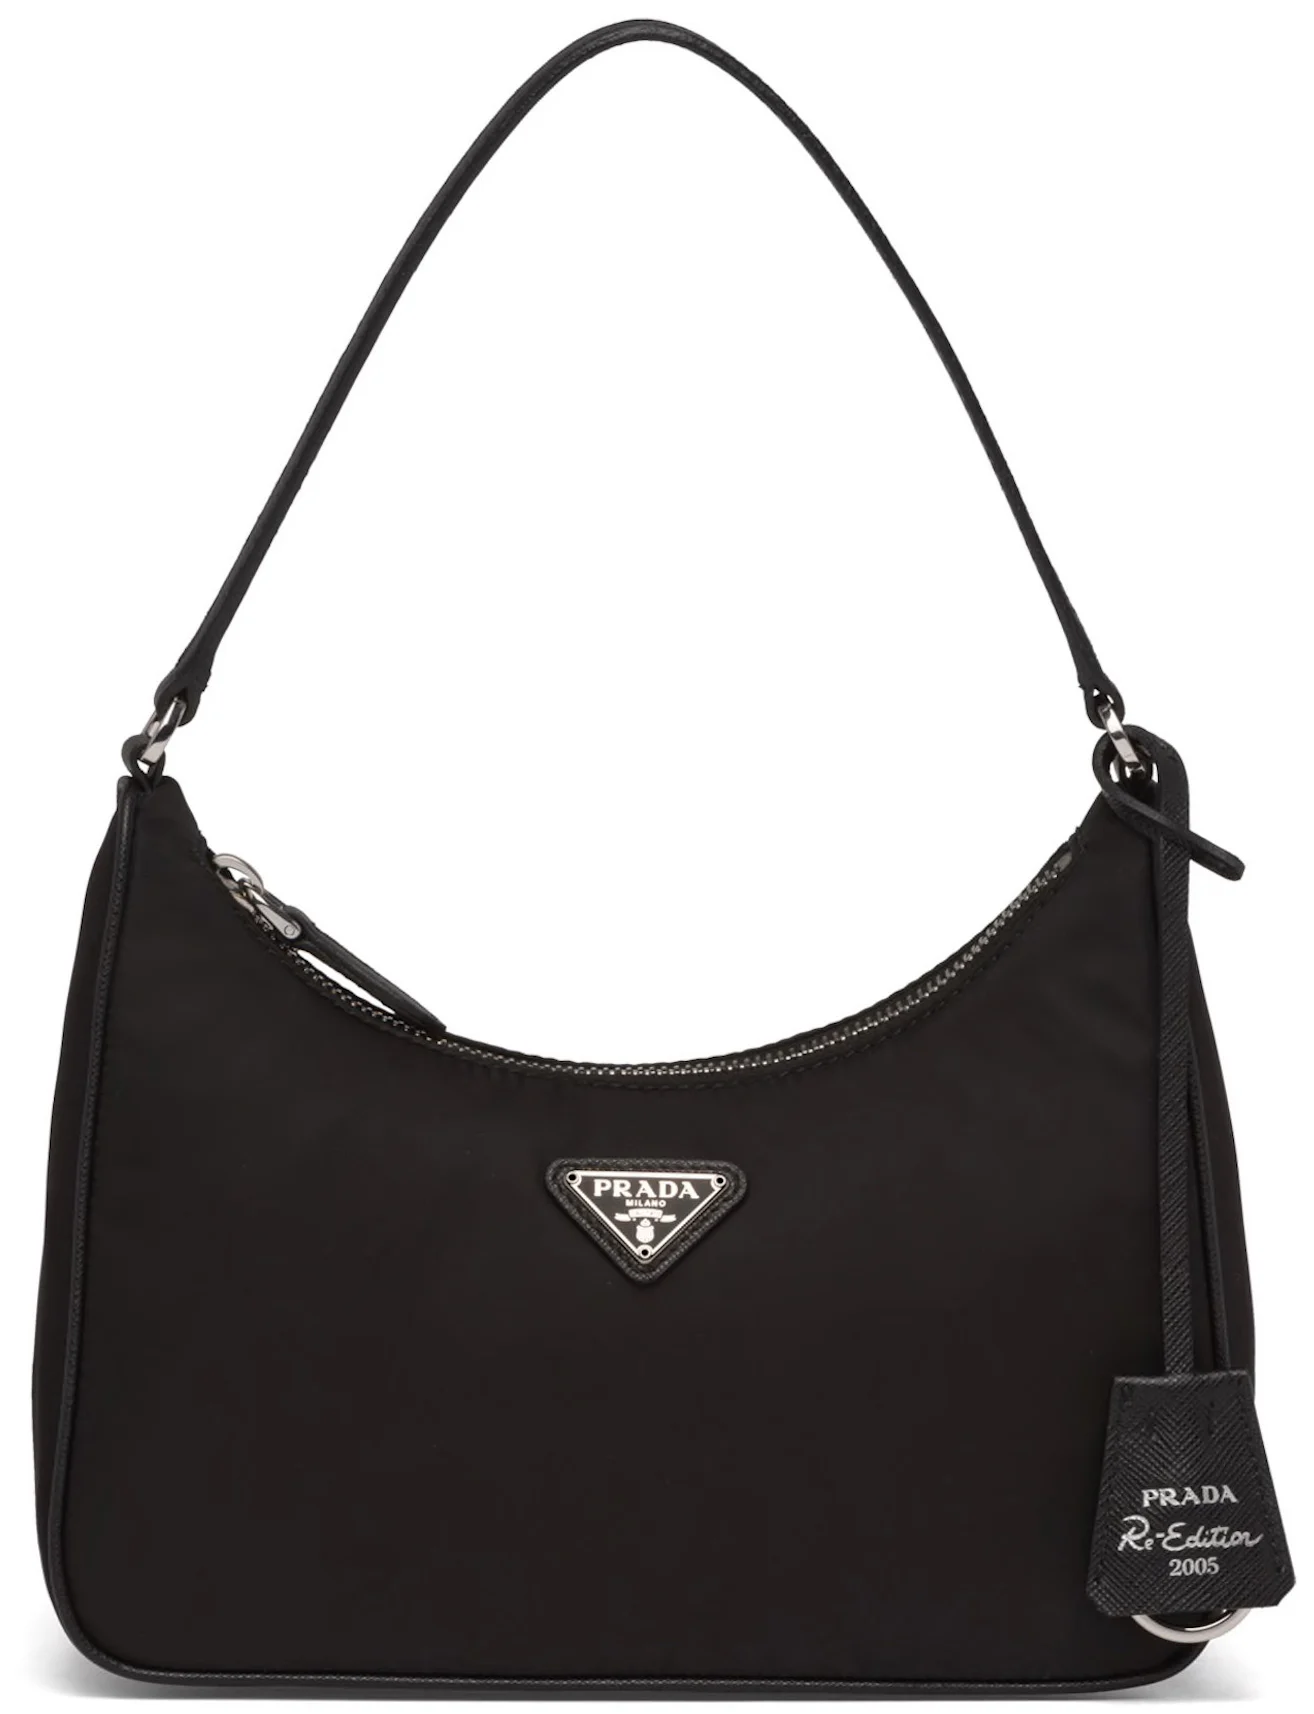 Prada Nylon Cross Body Bag Black Prada Re-Edition 2005 Nylon Bag